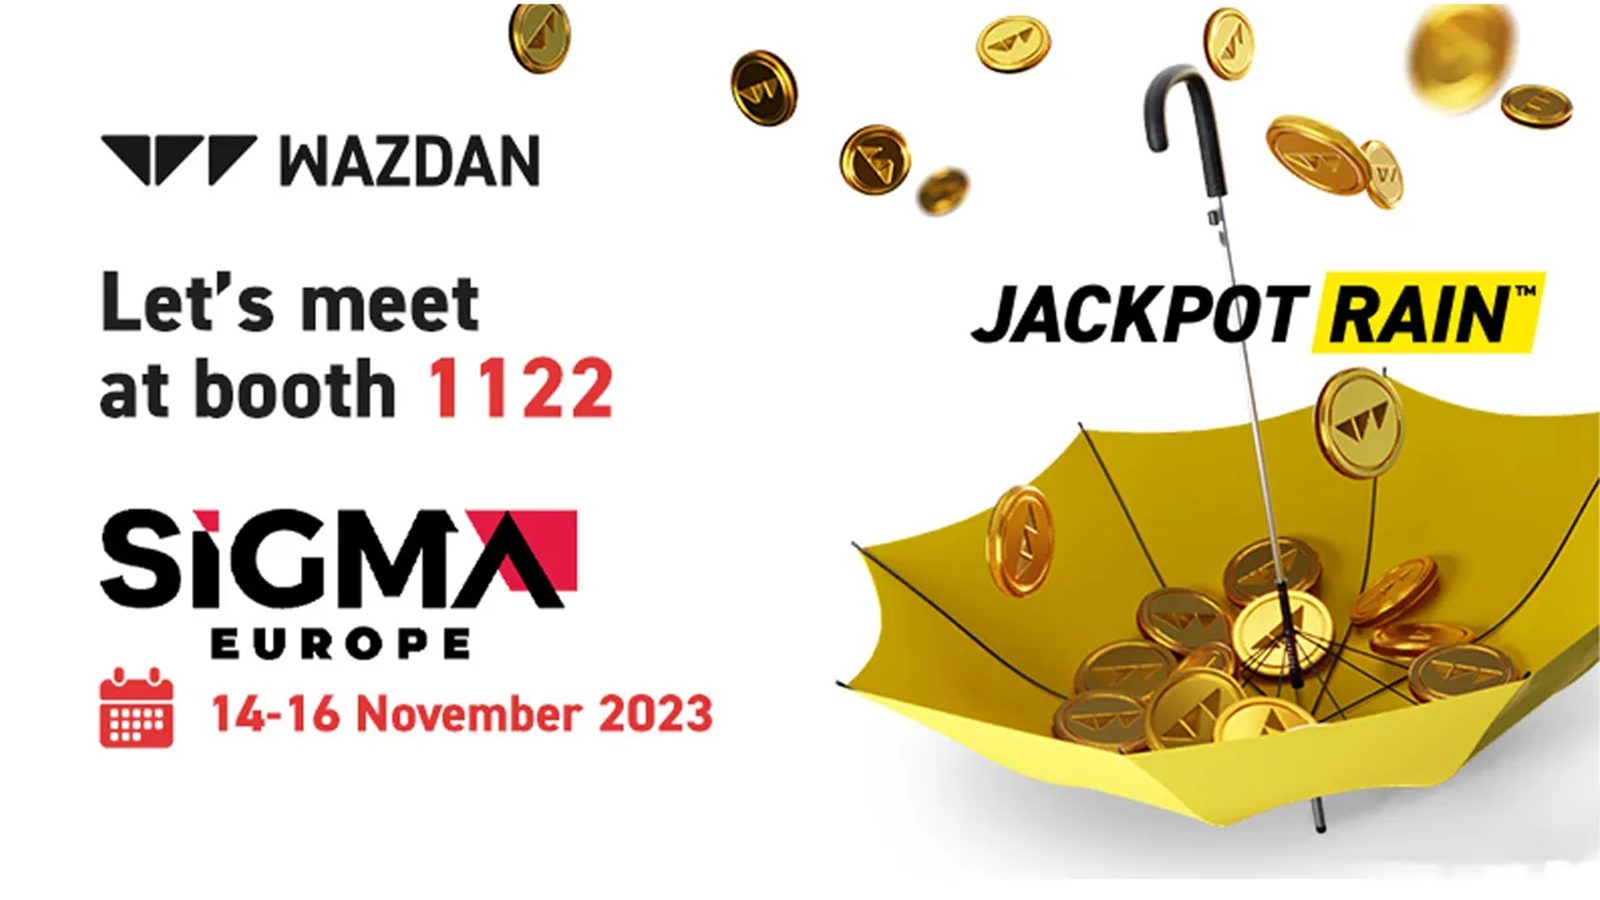 Wazdan's Showcase at SiGMA Europe 2023